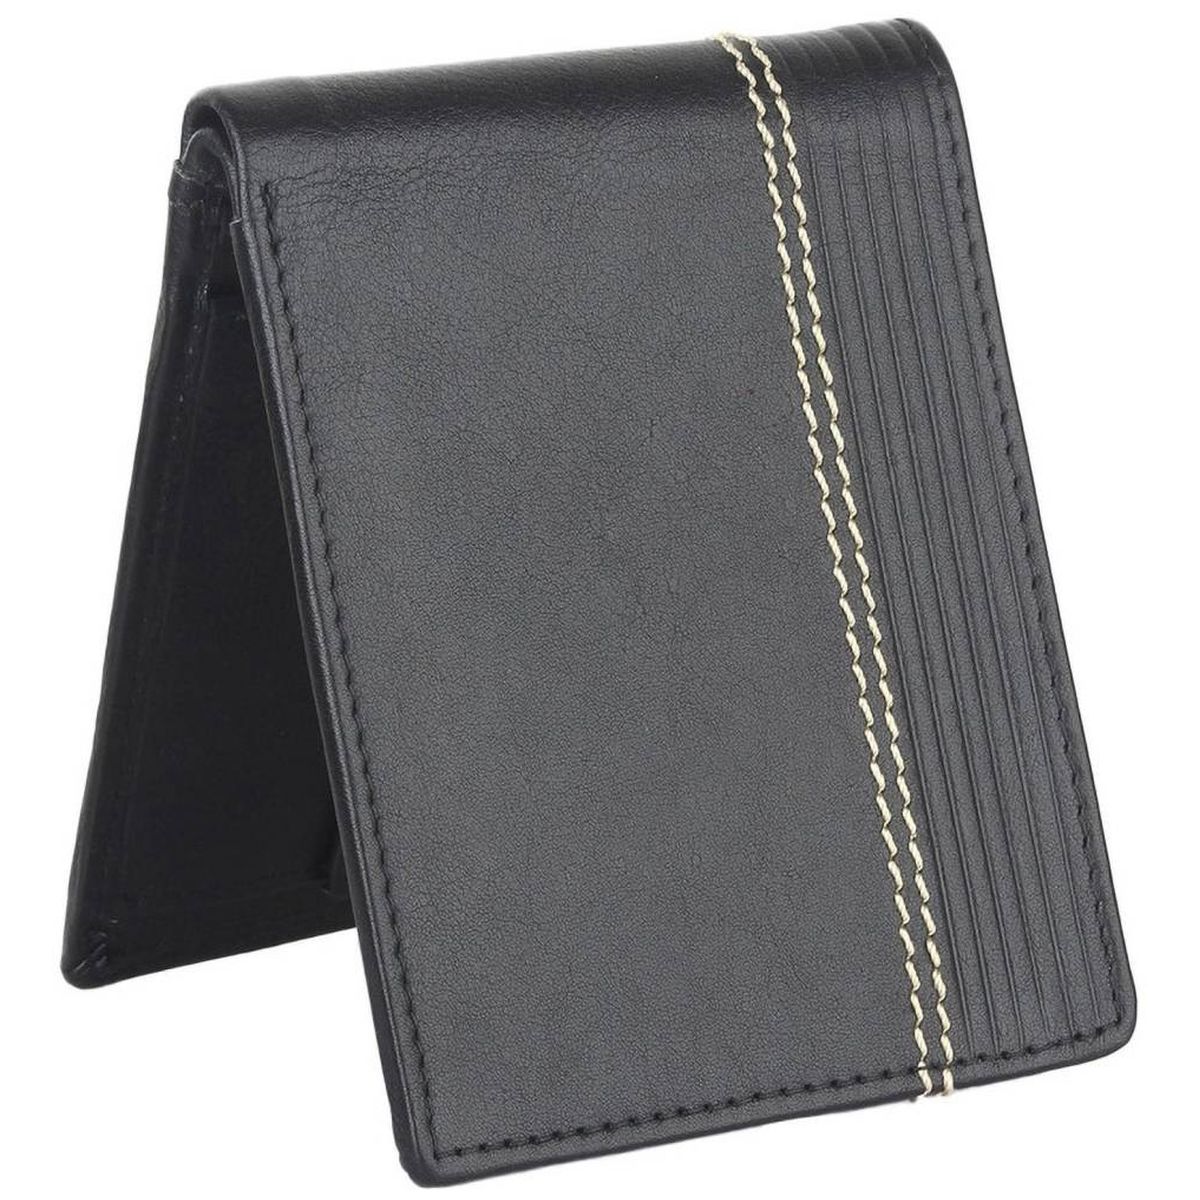 Craftwood Men Genuine Leather 3 Slots Wallet, DI934410, Black